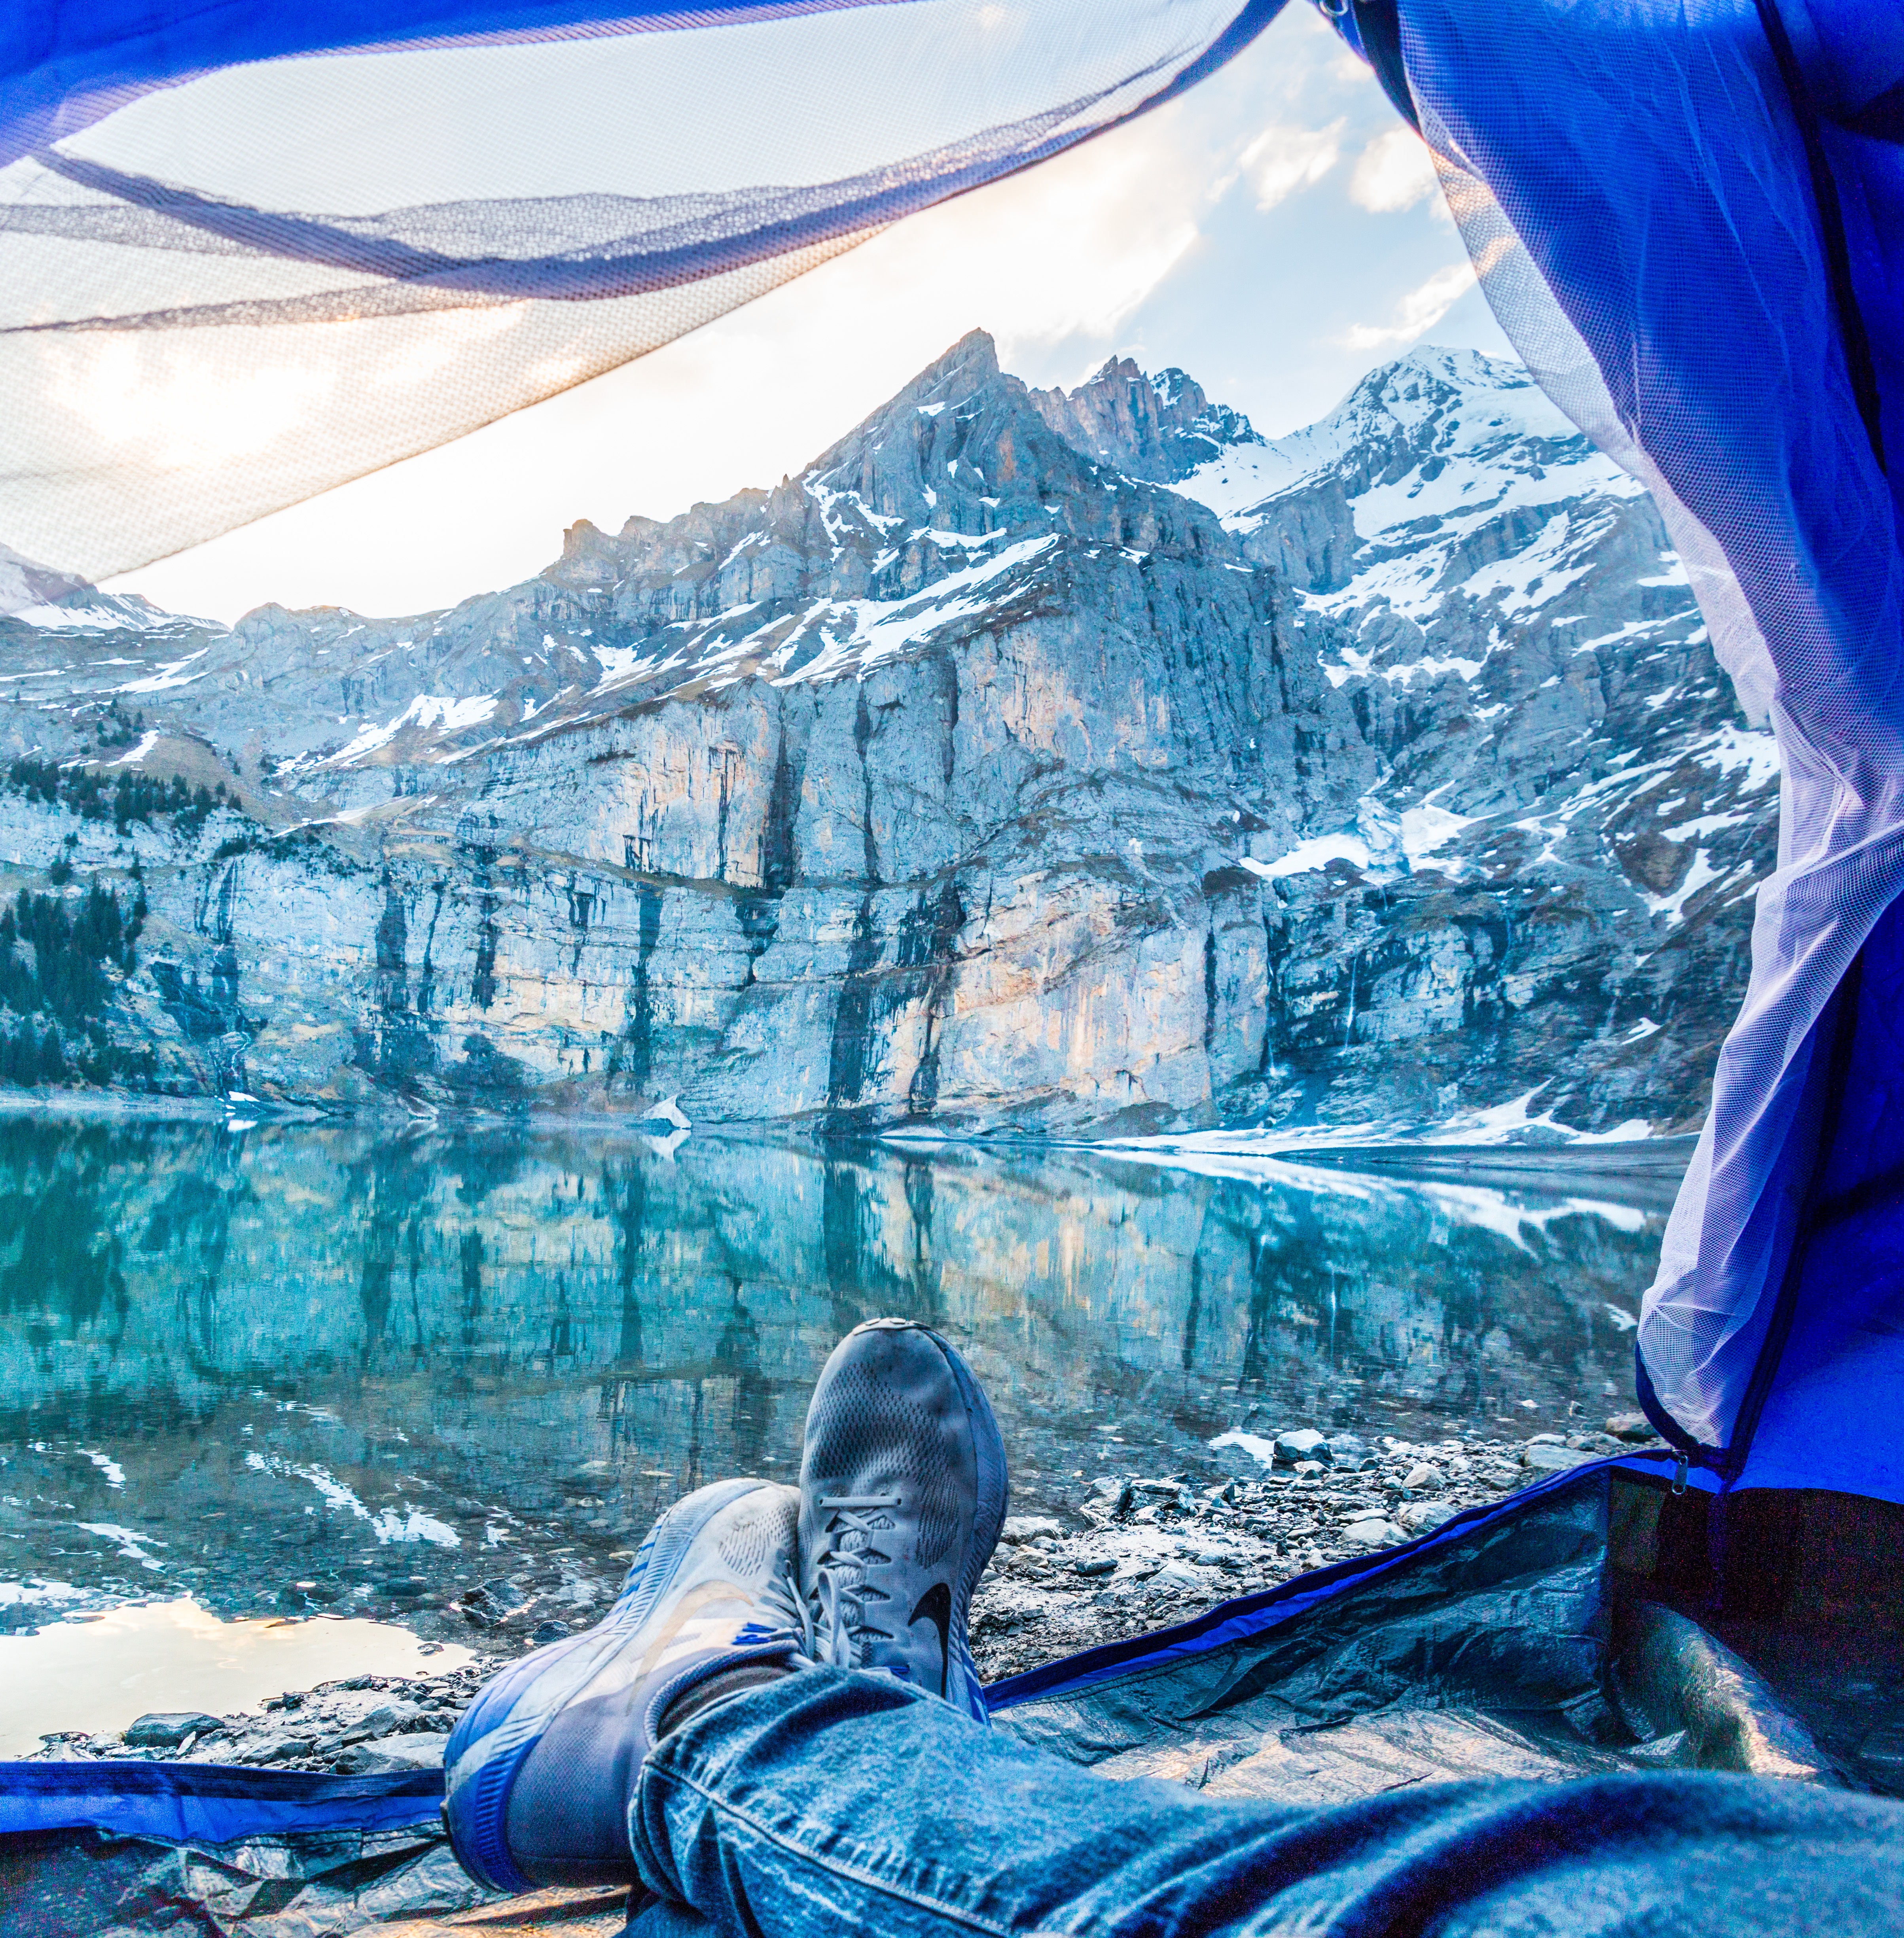 camping, mountains, lake, miscellanea, miscellaneous, legs, tent, campsite, tourism cellphone